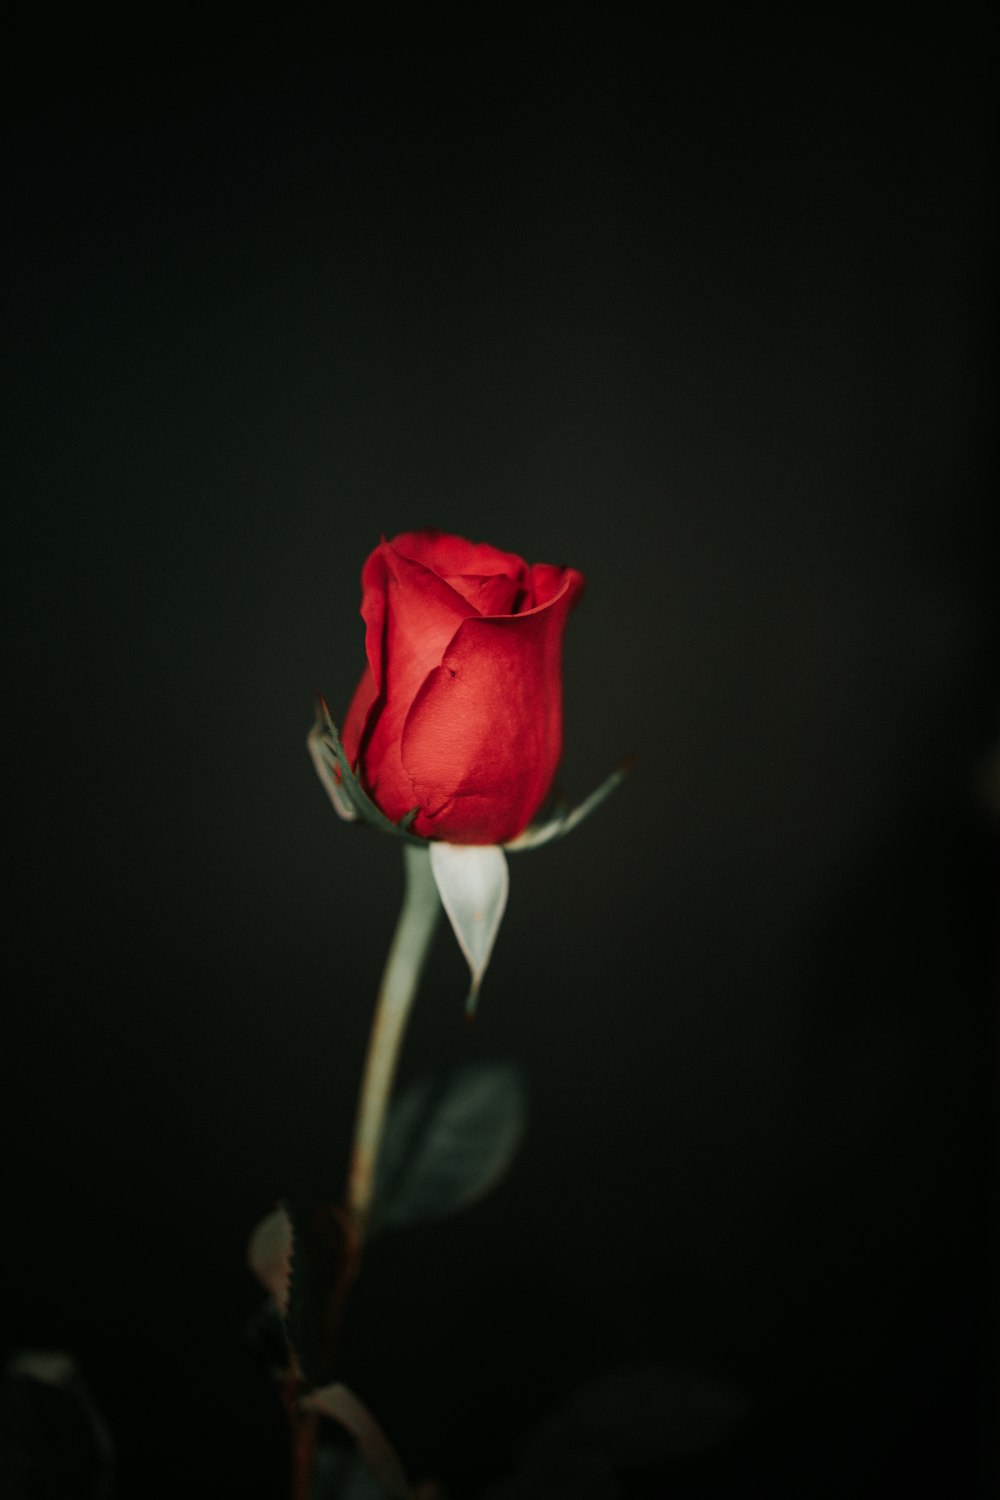 Red Rose Flower Pictures | Download Free Images on Unsplash